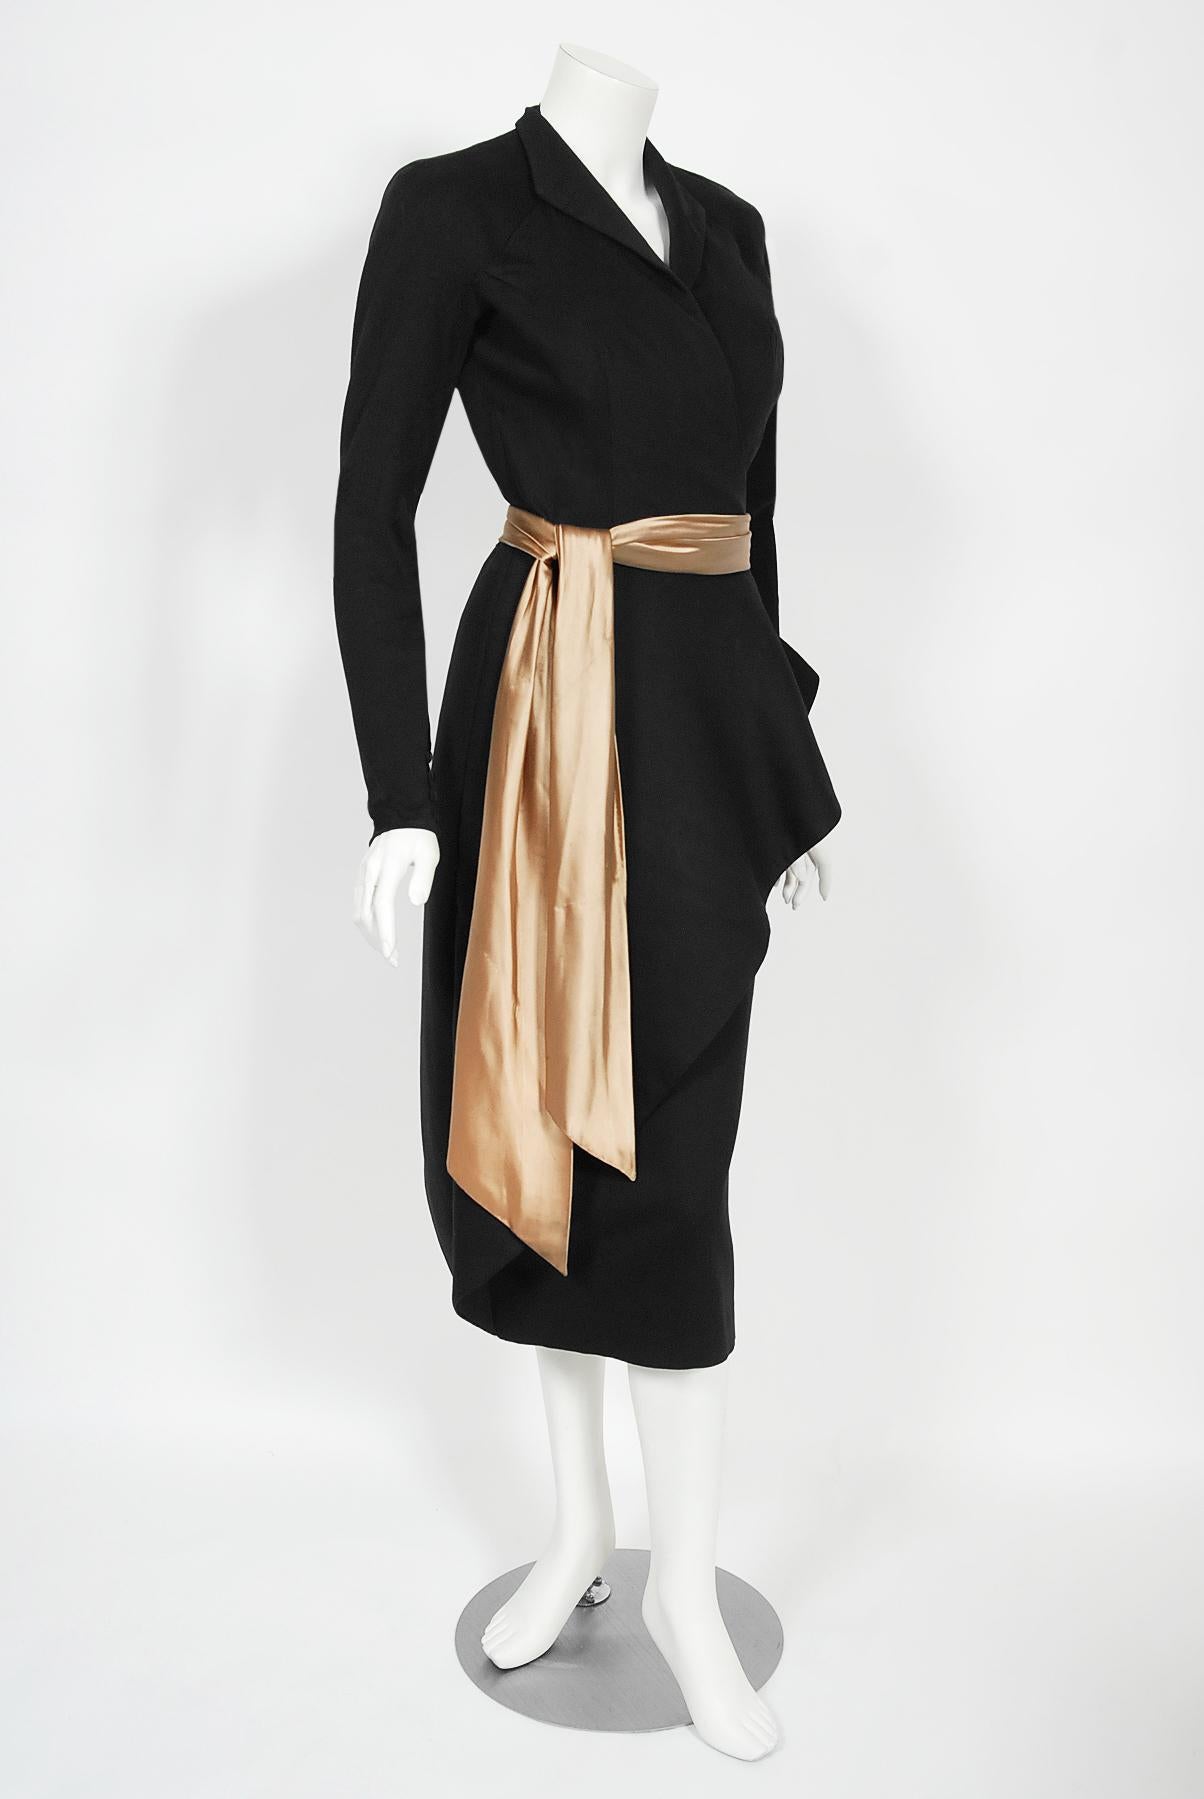 Vintage 1949 Lanvin Haute Couture Documented Sculpted Black Wool Cocktail Dress 1